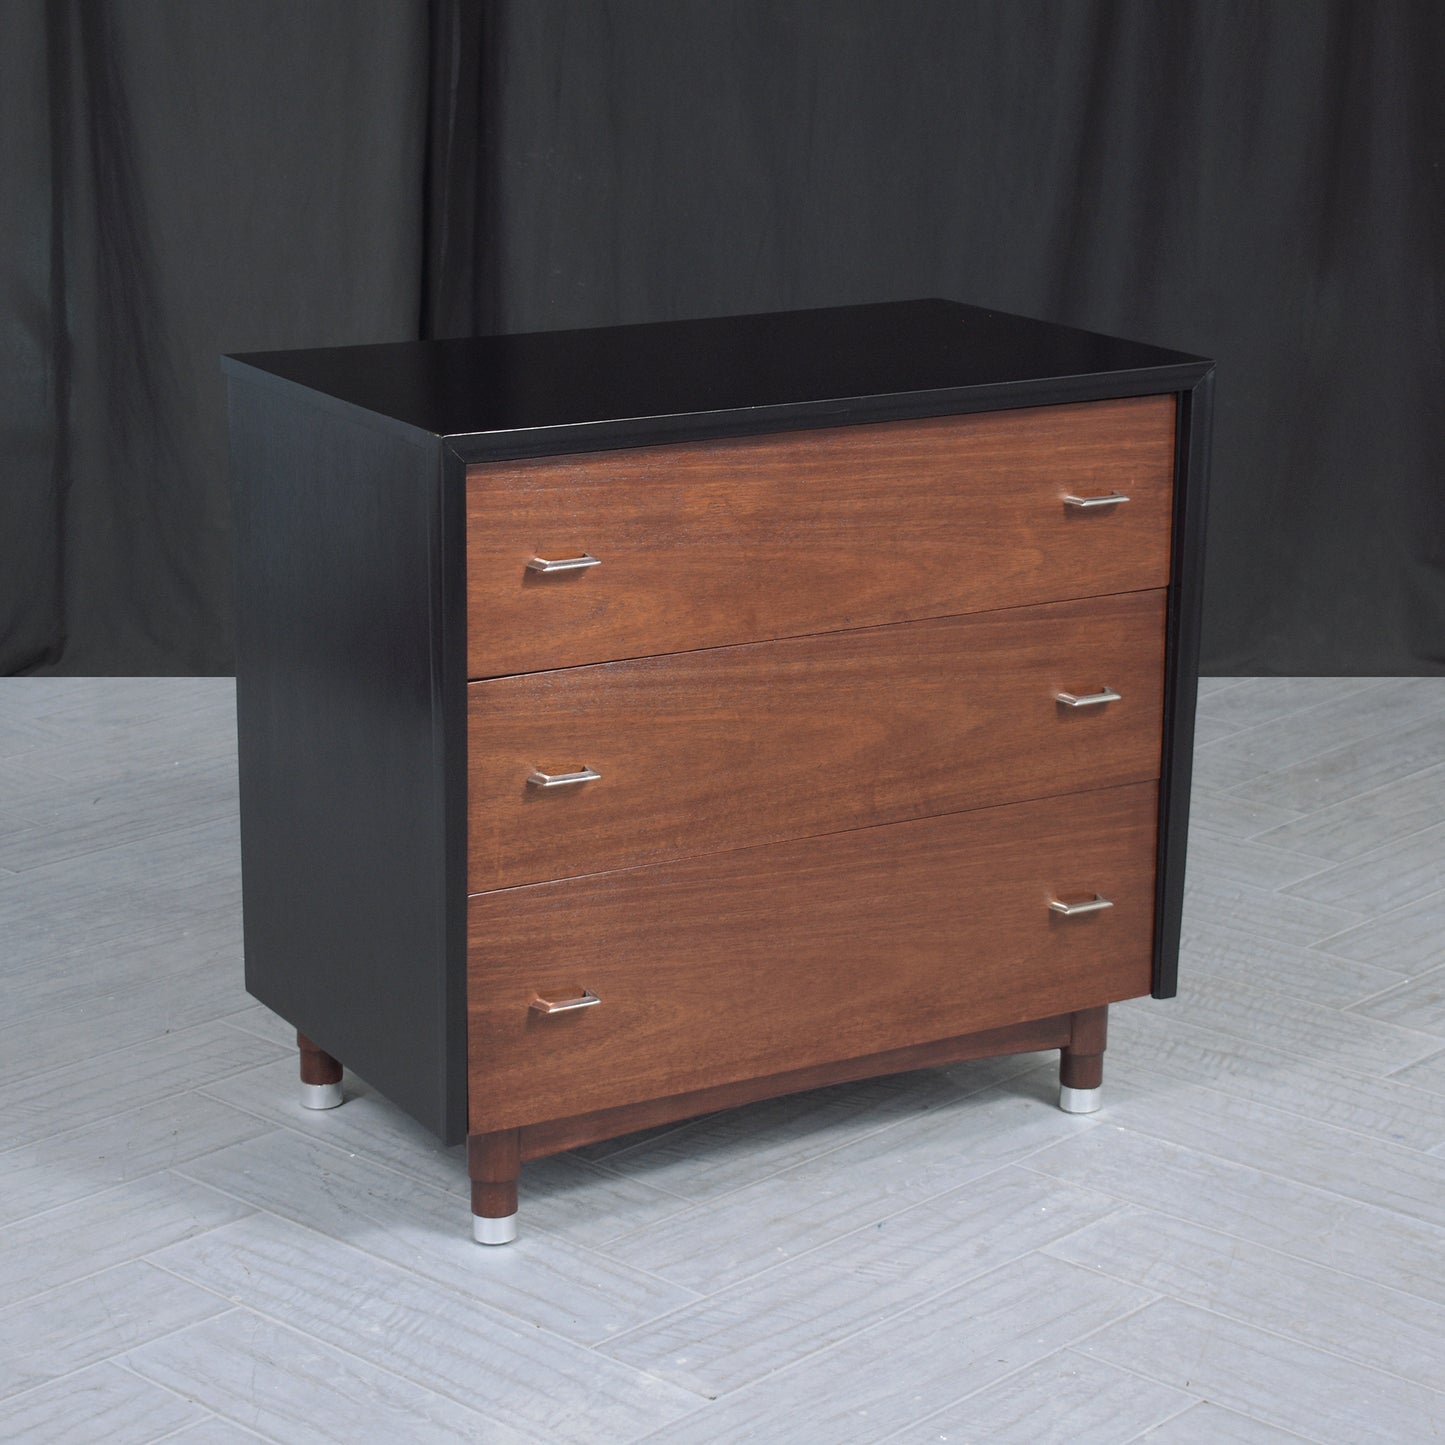 Restored Vintage 1960s Mid-Century Modern Mahogany Dresser